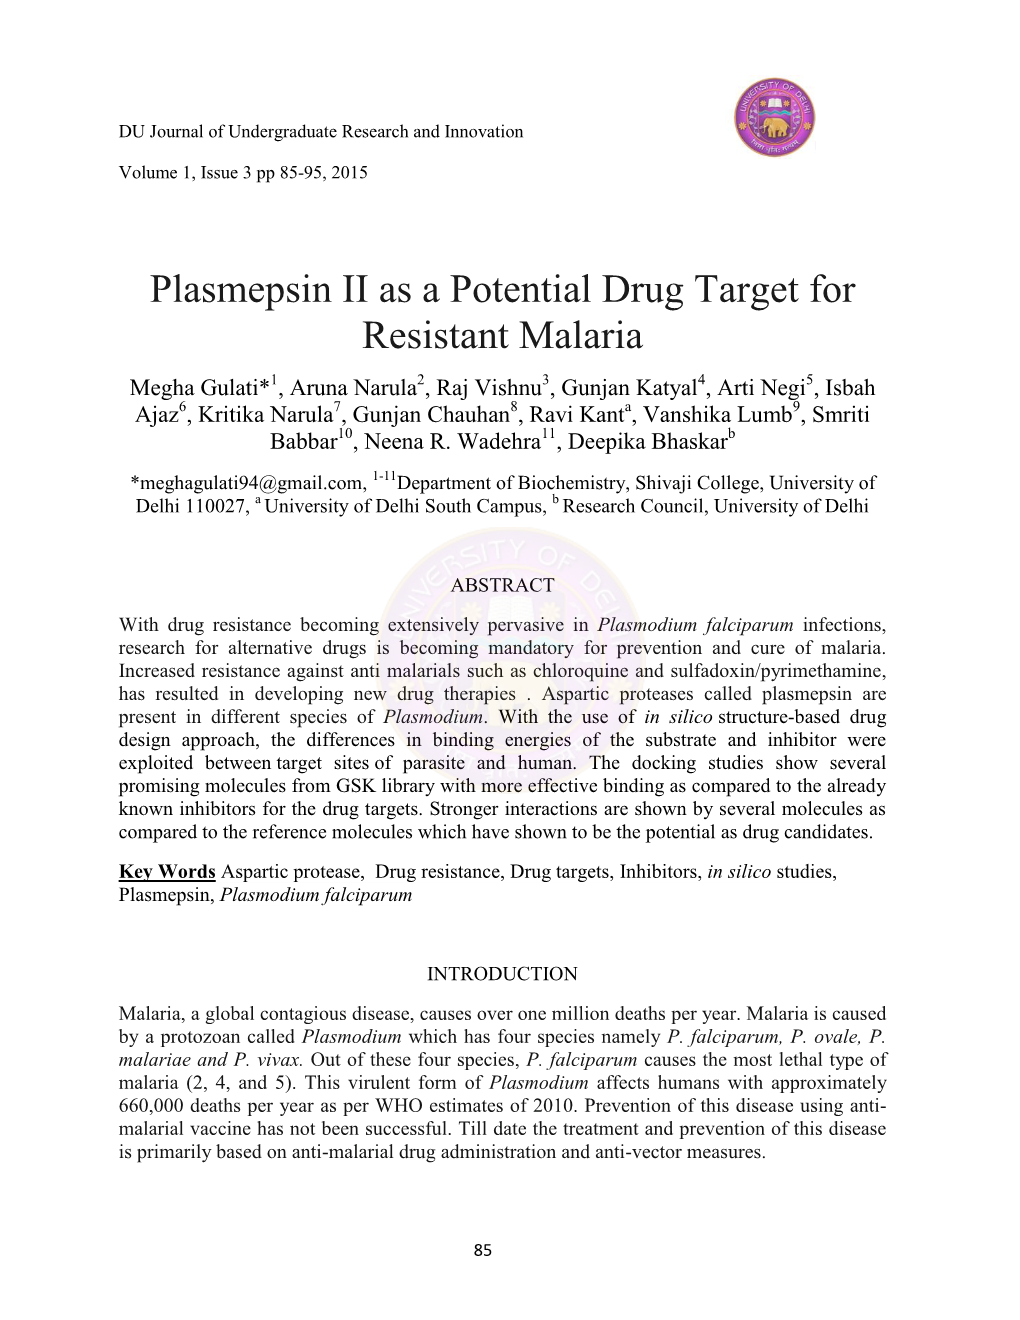 Plasmepsin II As a Potential Drug Target for Resistant Malaria